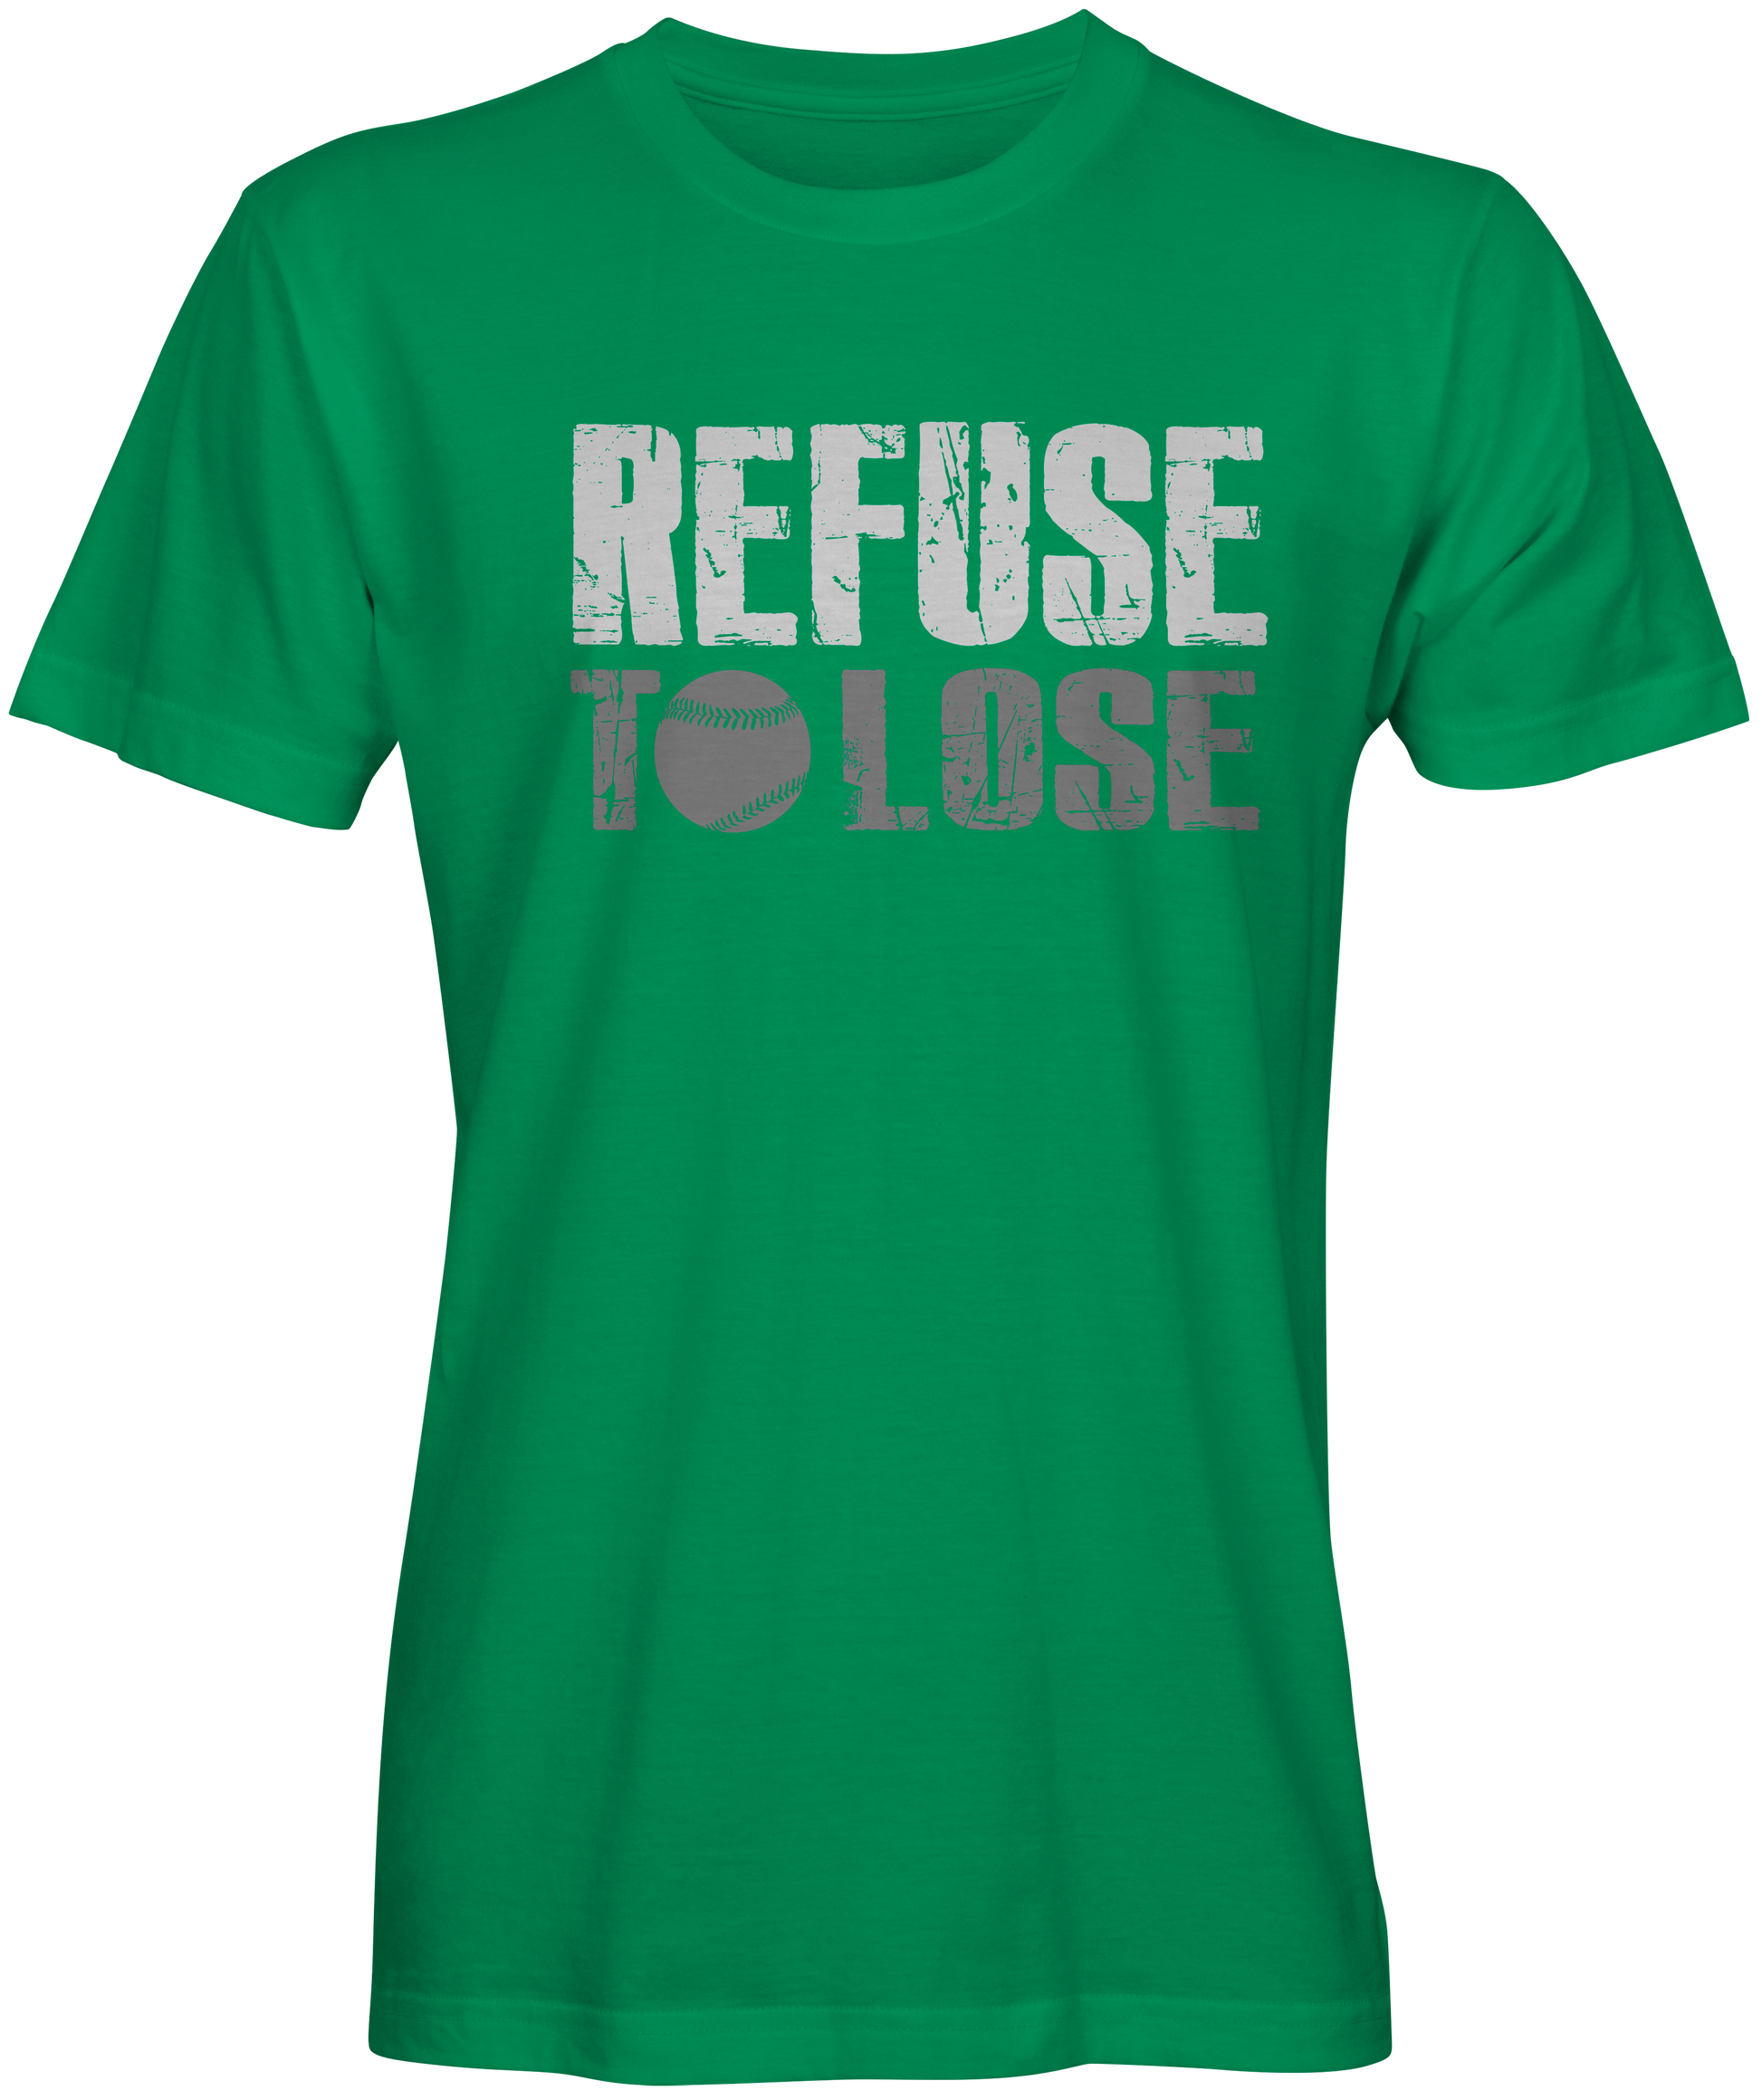 Refuse To Lose  Baseball Inspired T-shirts